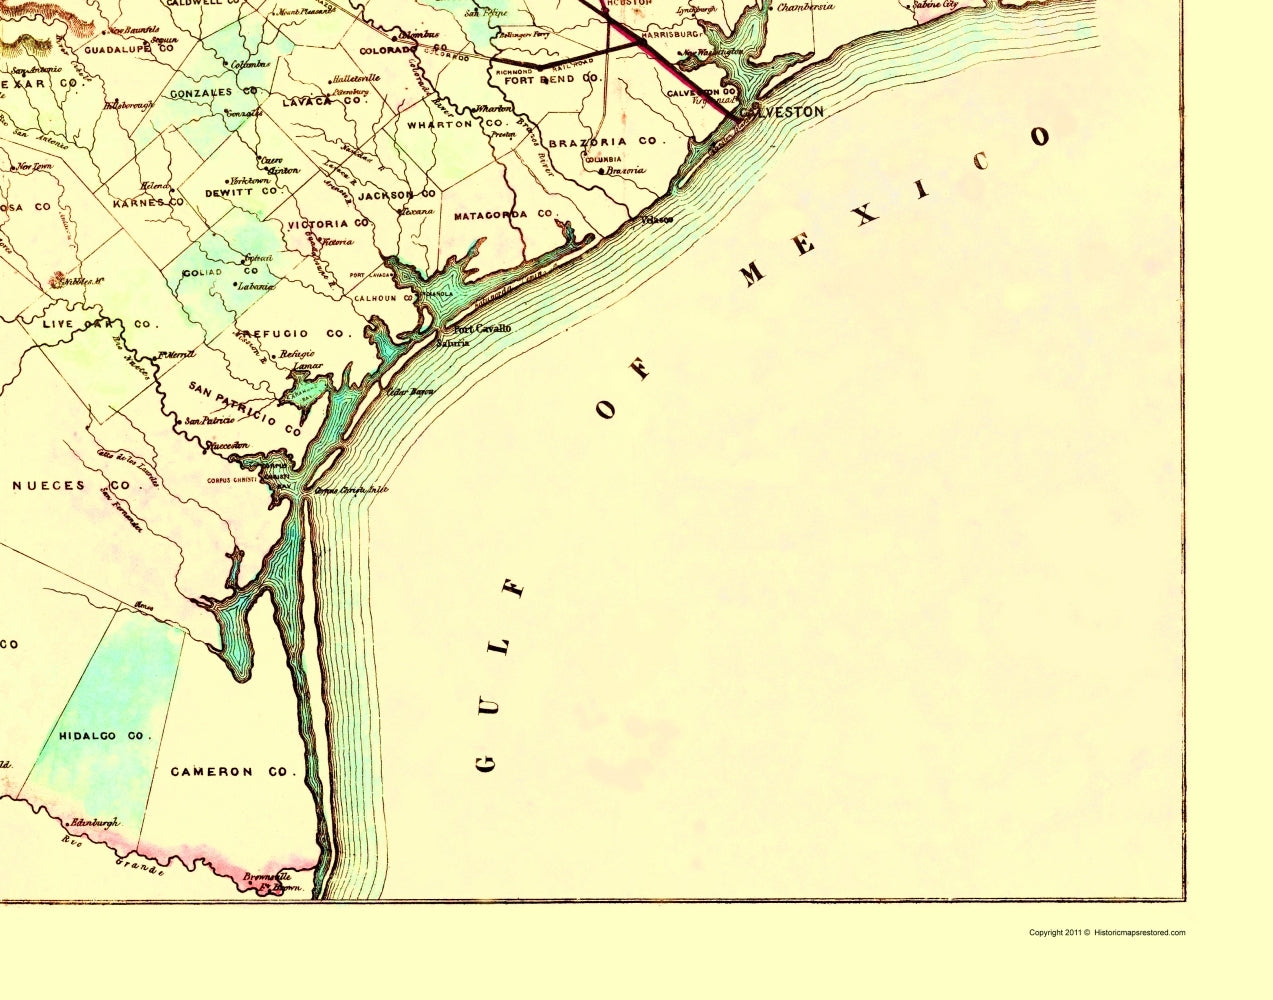 Railroad Map - Galveston Houston Henderson Railroad 1872 - 23 x 29 - Vintage Wall Art